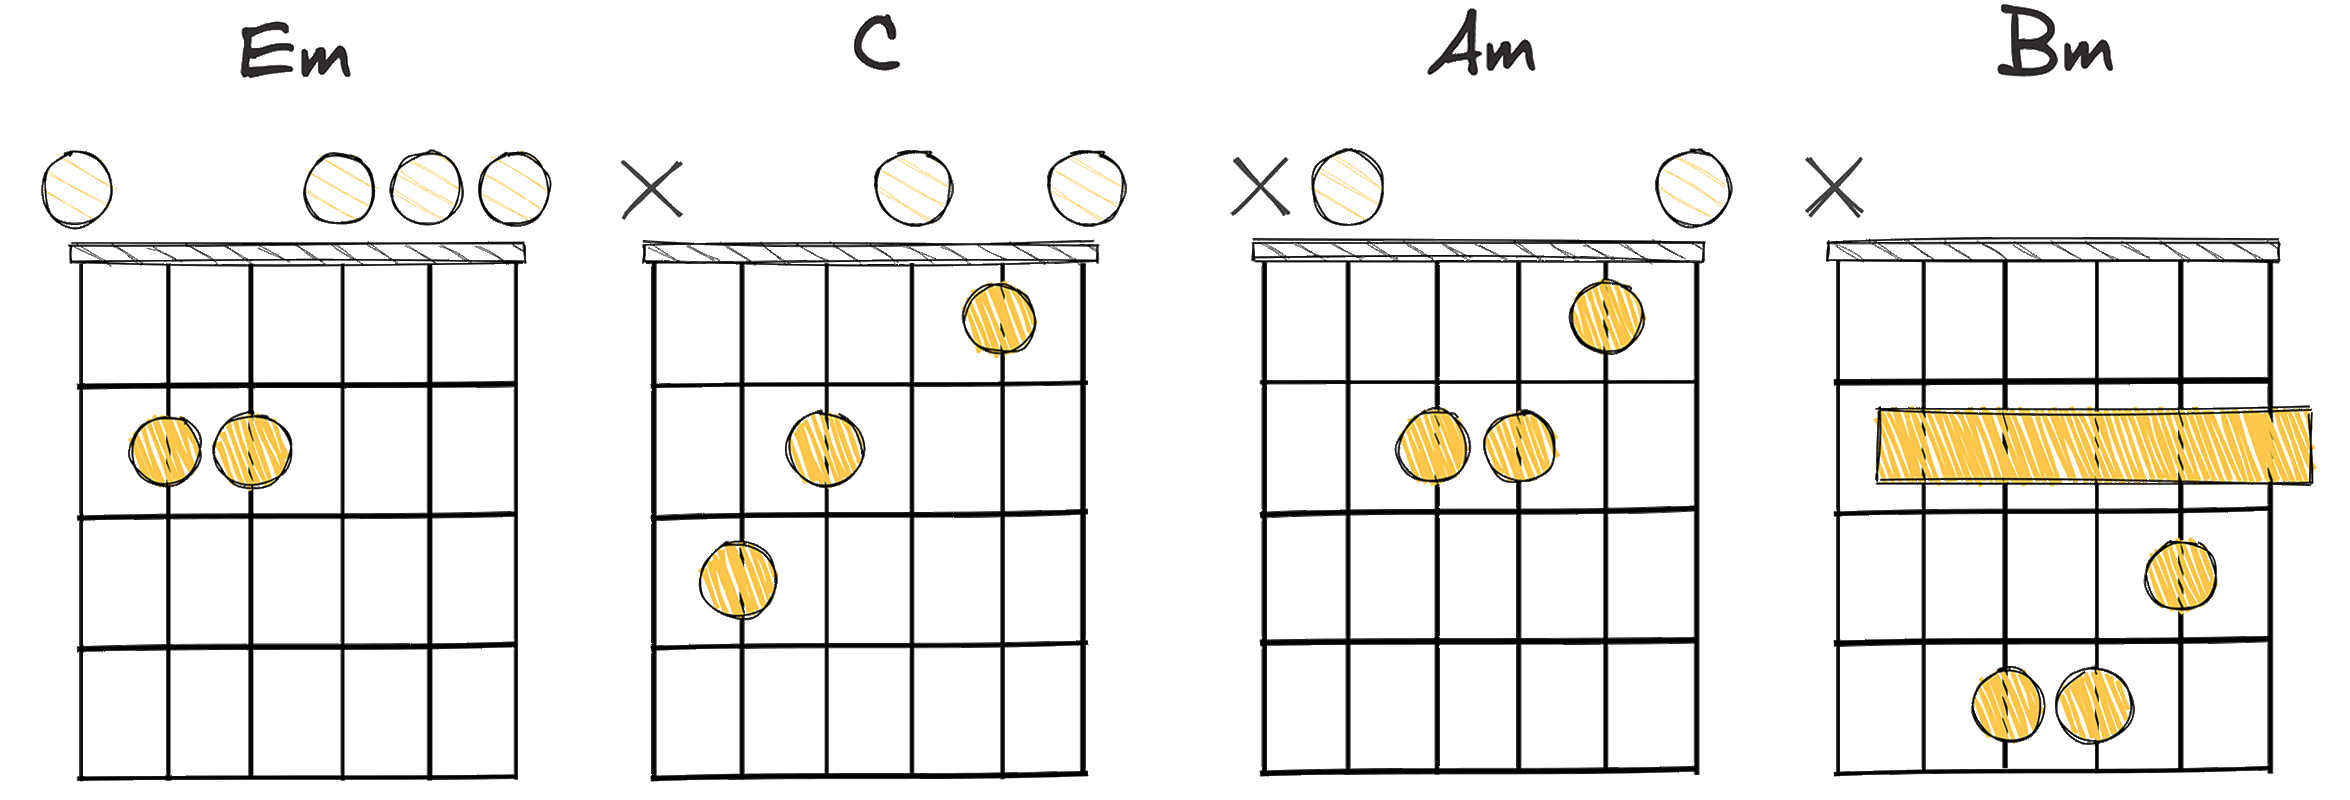 i - VI - iv - v (1-6-4-5) chords diagram